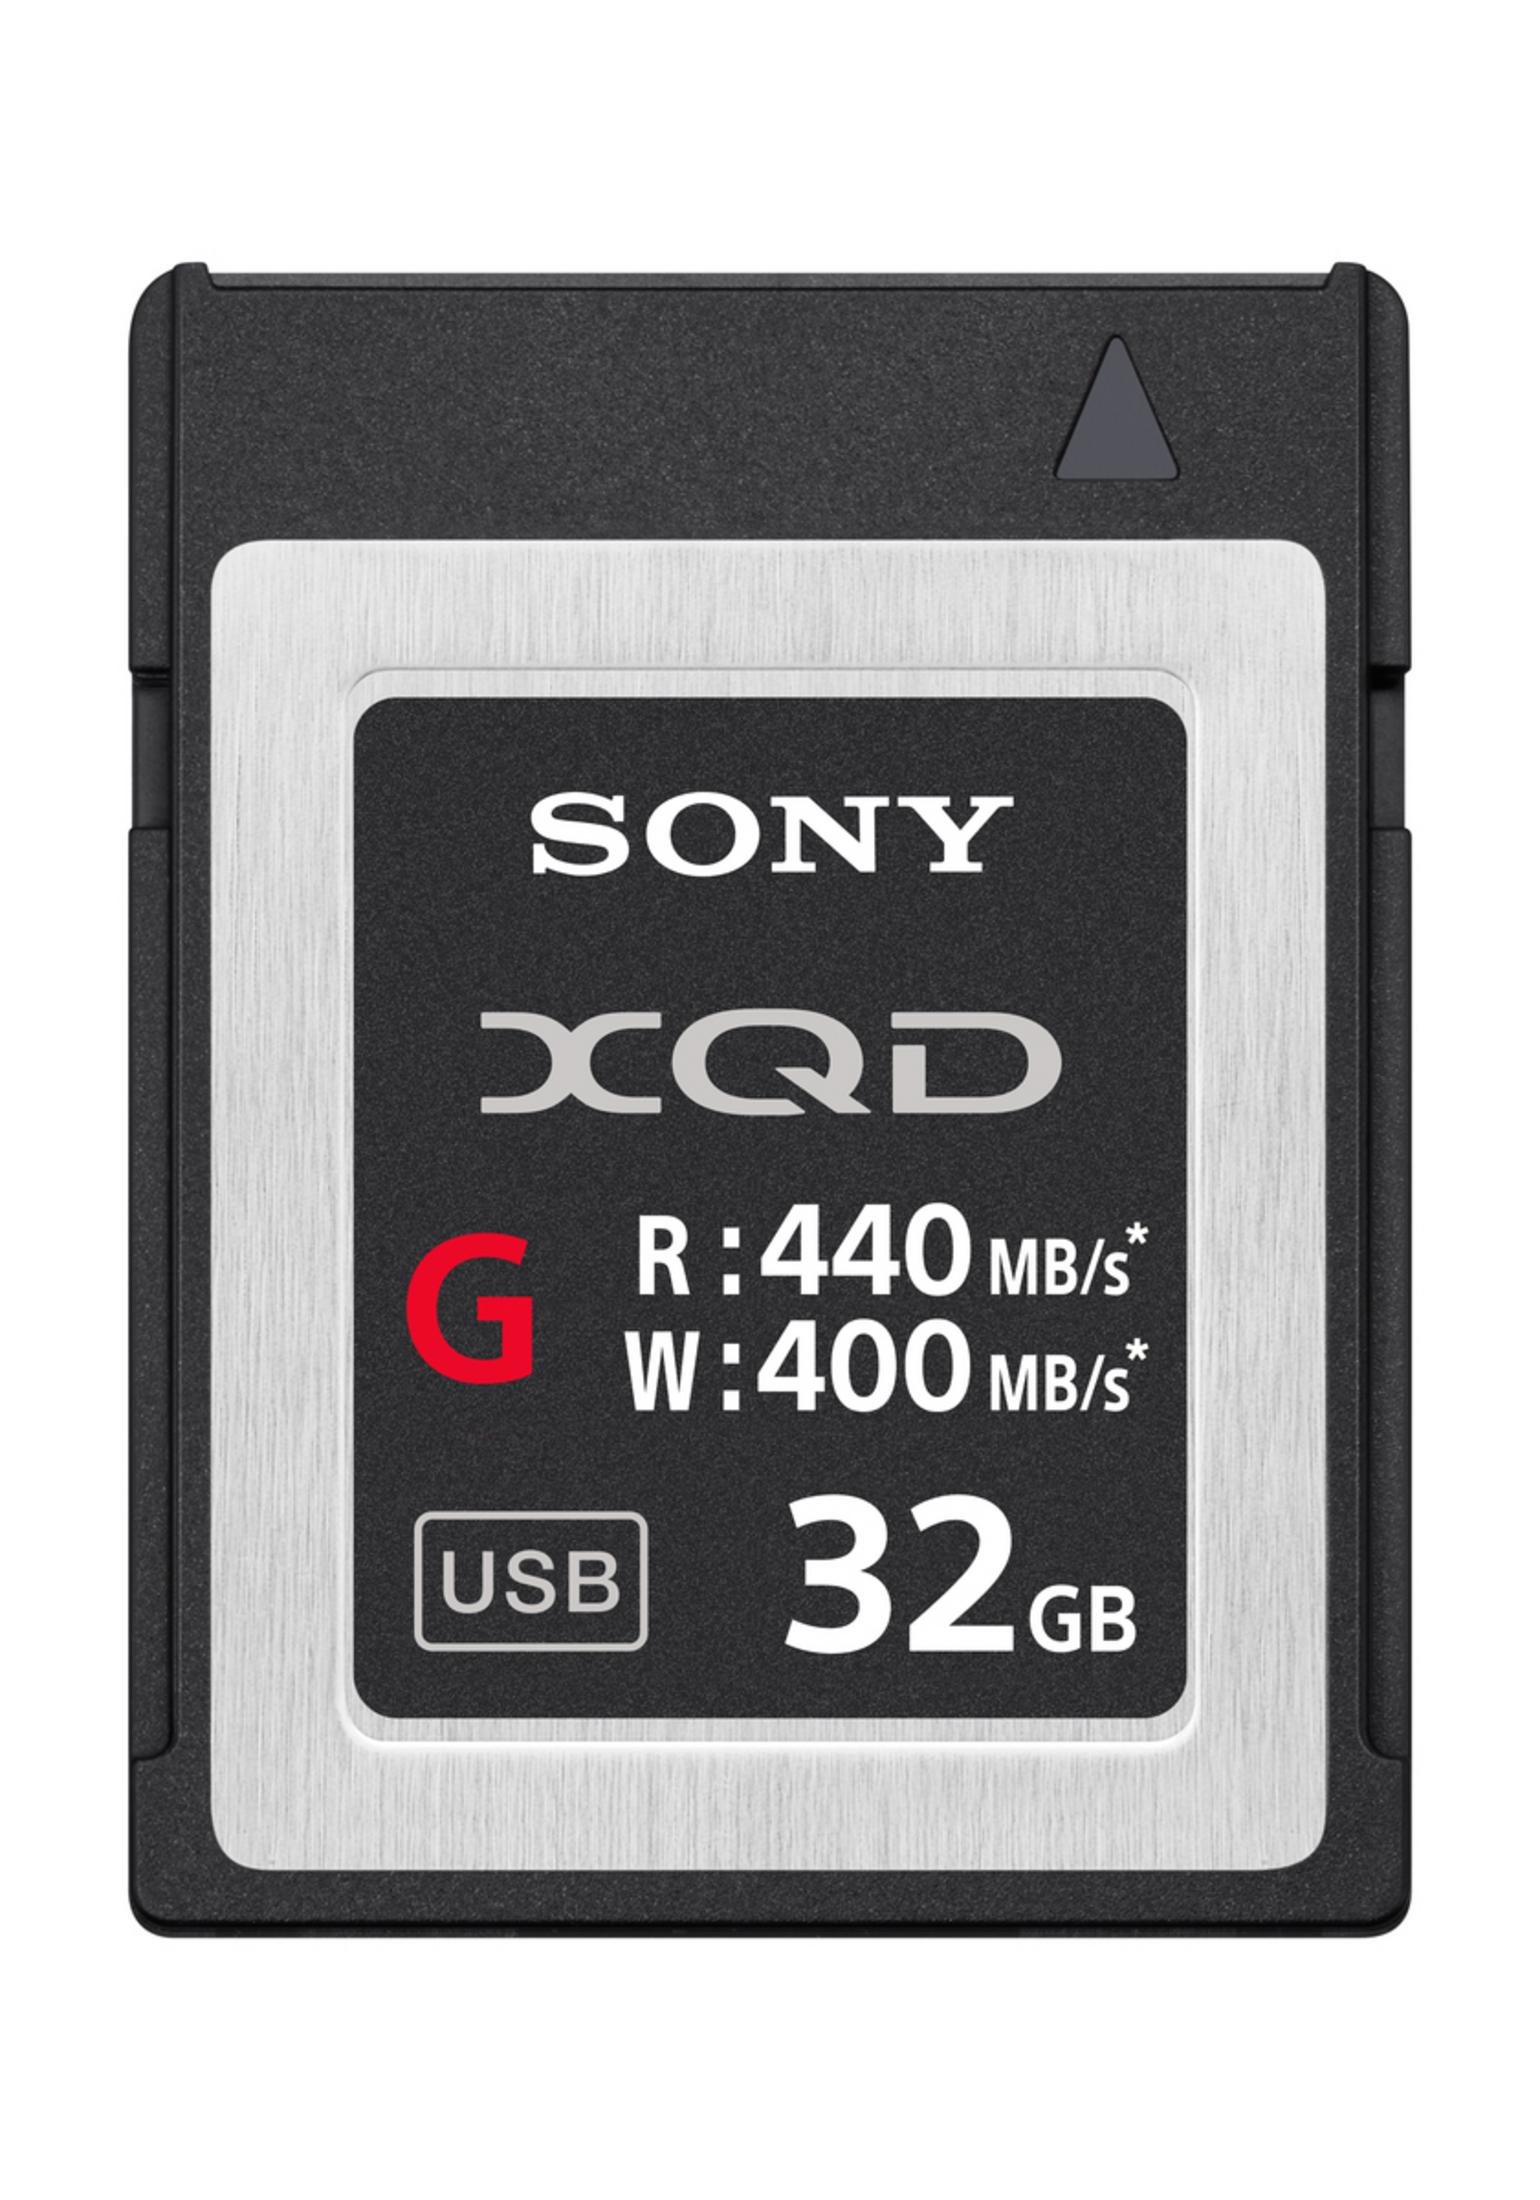 SONY QDG32E 32GB MEMORY CARD GB, MB/s 440 32 XQD Speicherkarte, G